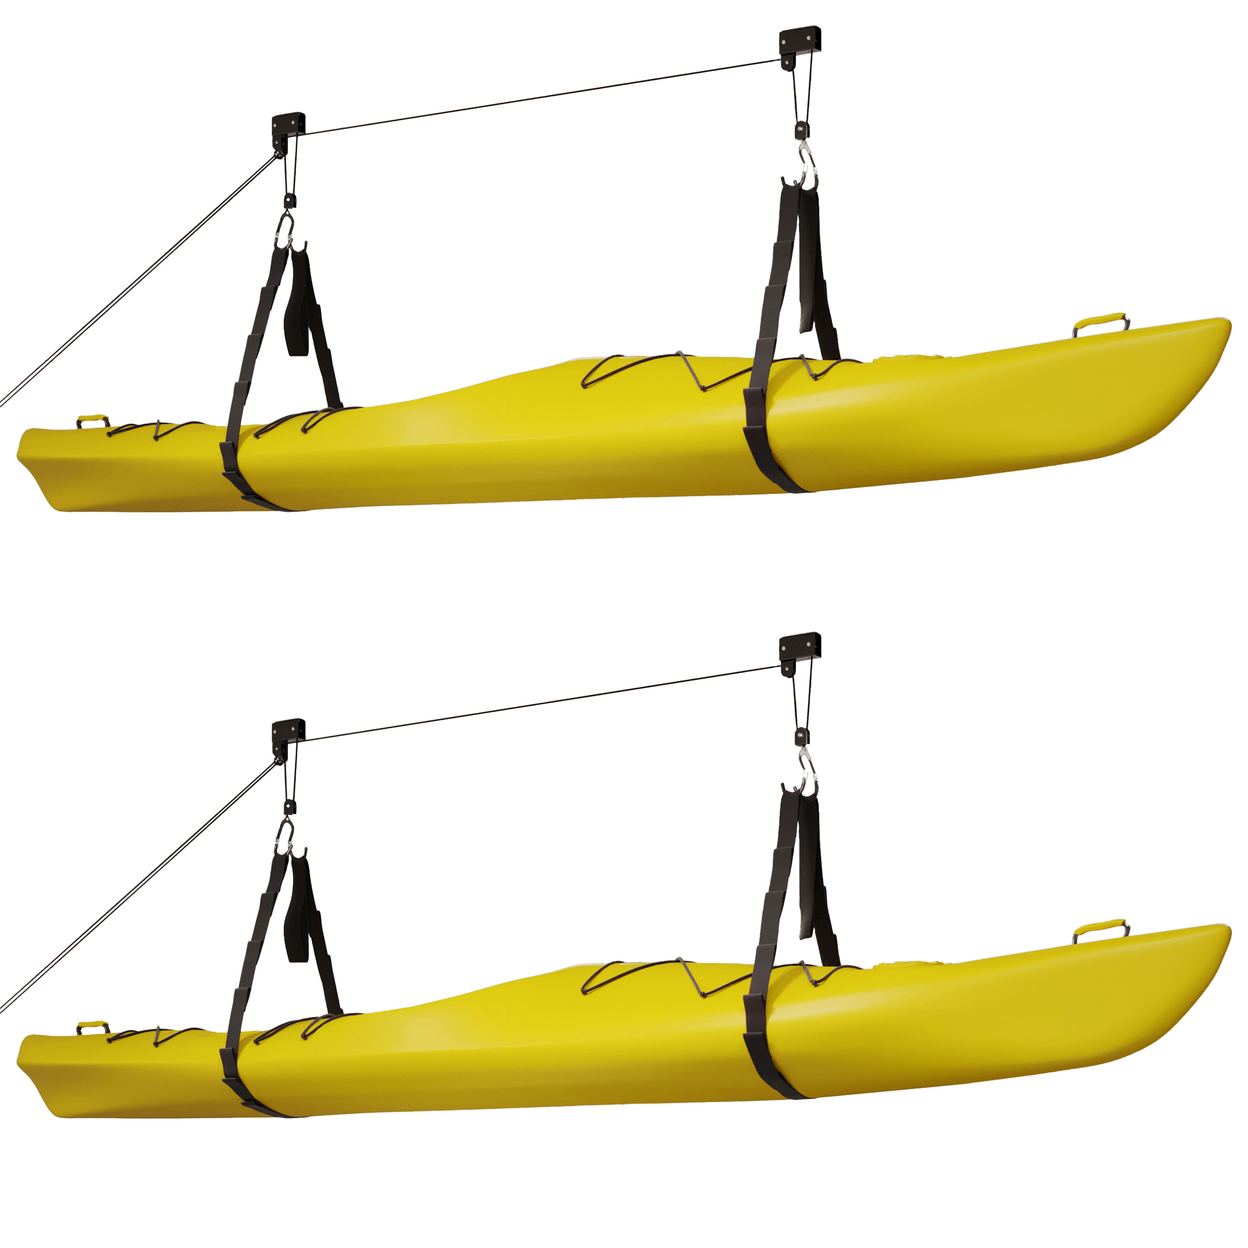 Kayak Hoist Lift Garage Storage Canoe Hoists 125 Lb Capacity - Two 2 Pack